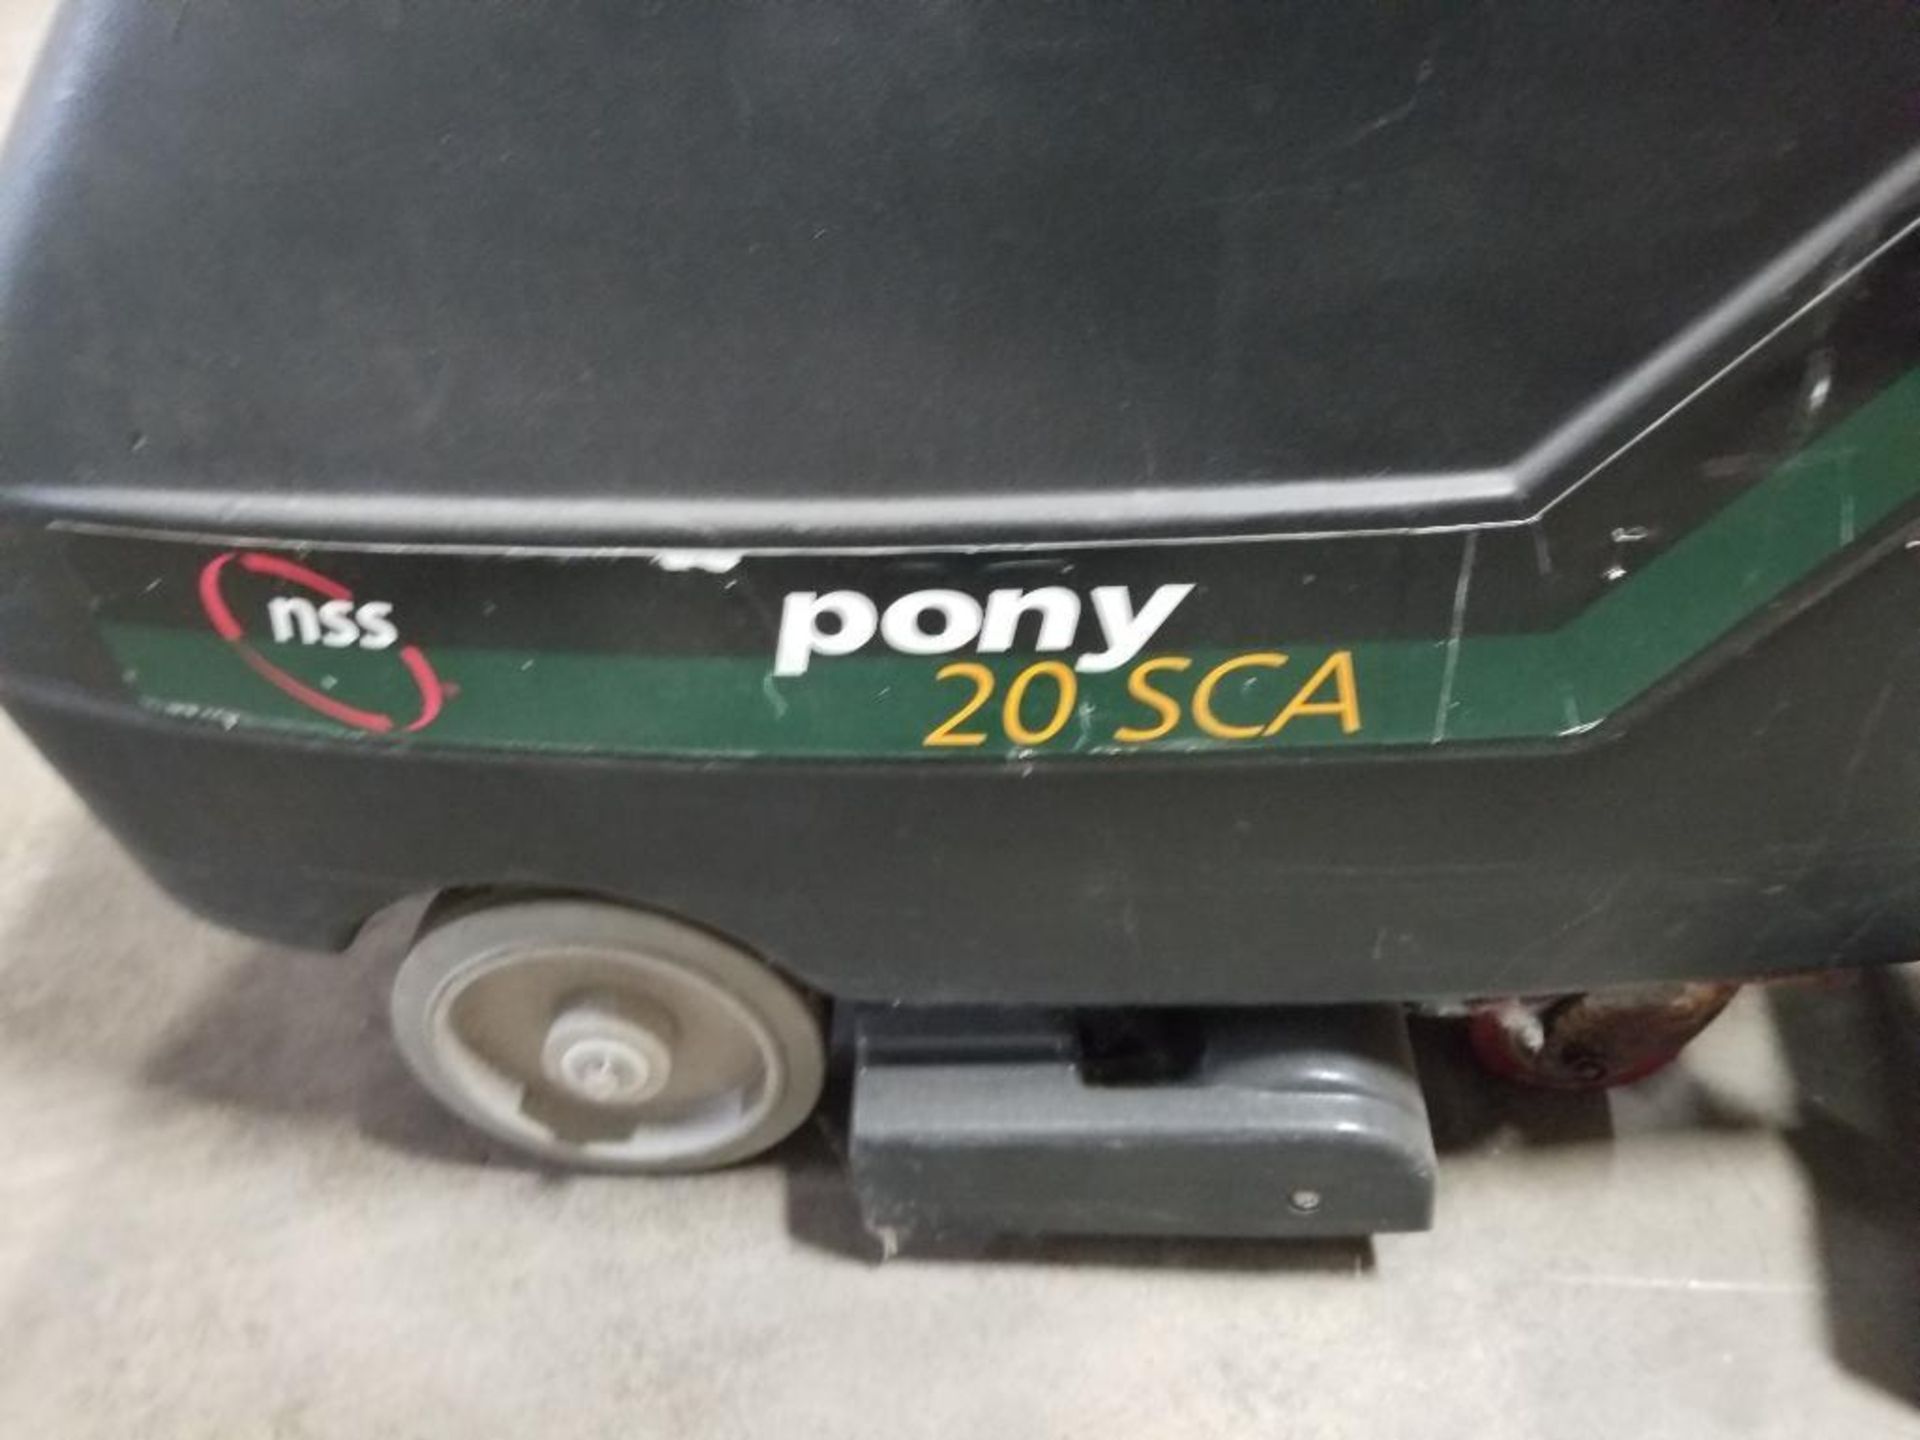 NSS floor sweeper. Model Pony 20 SCA. - Image 2 of 10